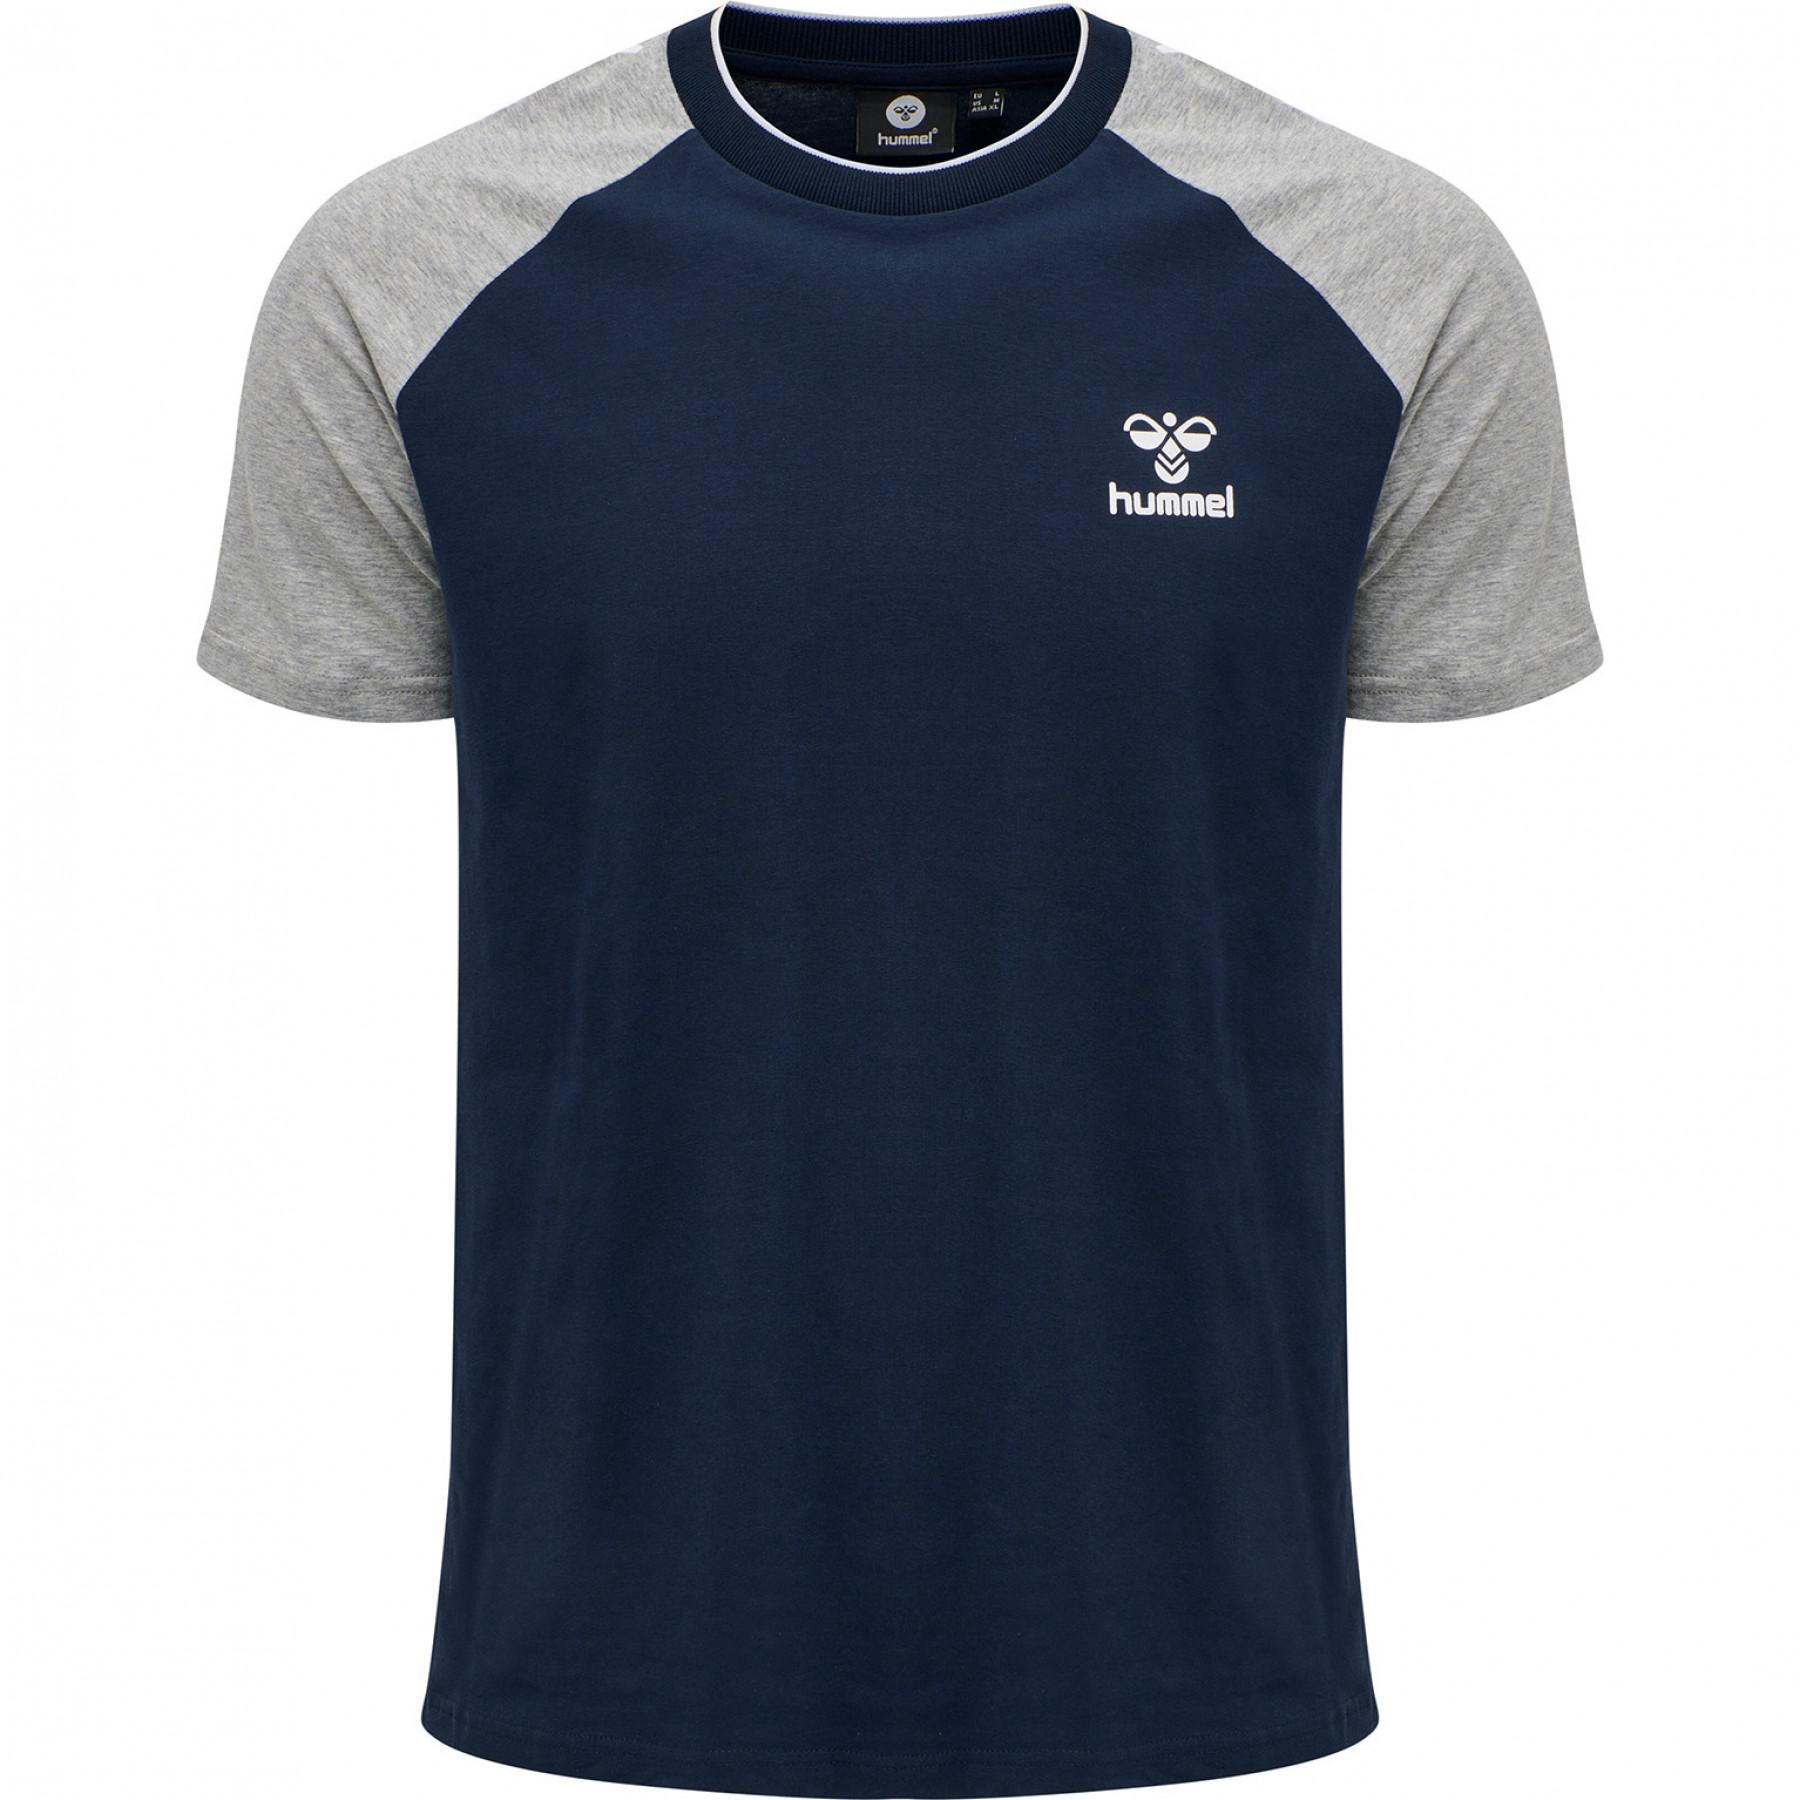 T-shirt Hummel hmlmark - T-shirts and polos - Textile - Handball wear